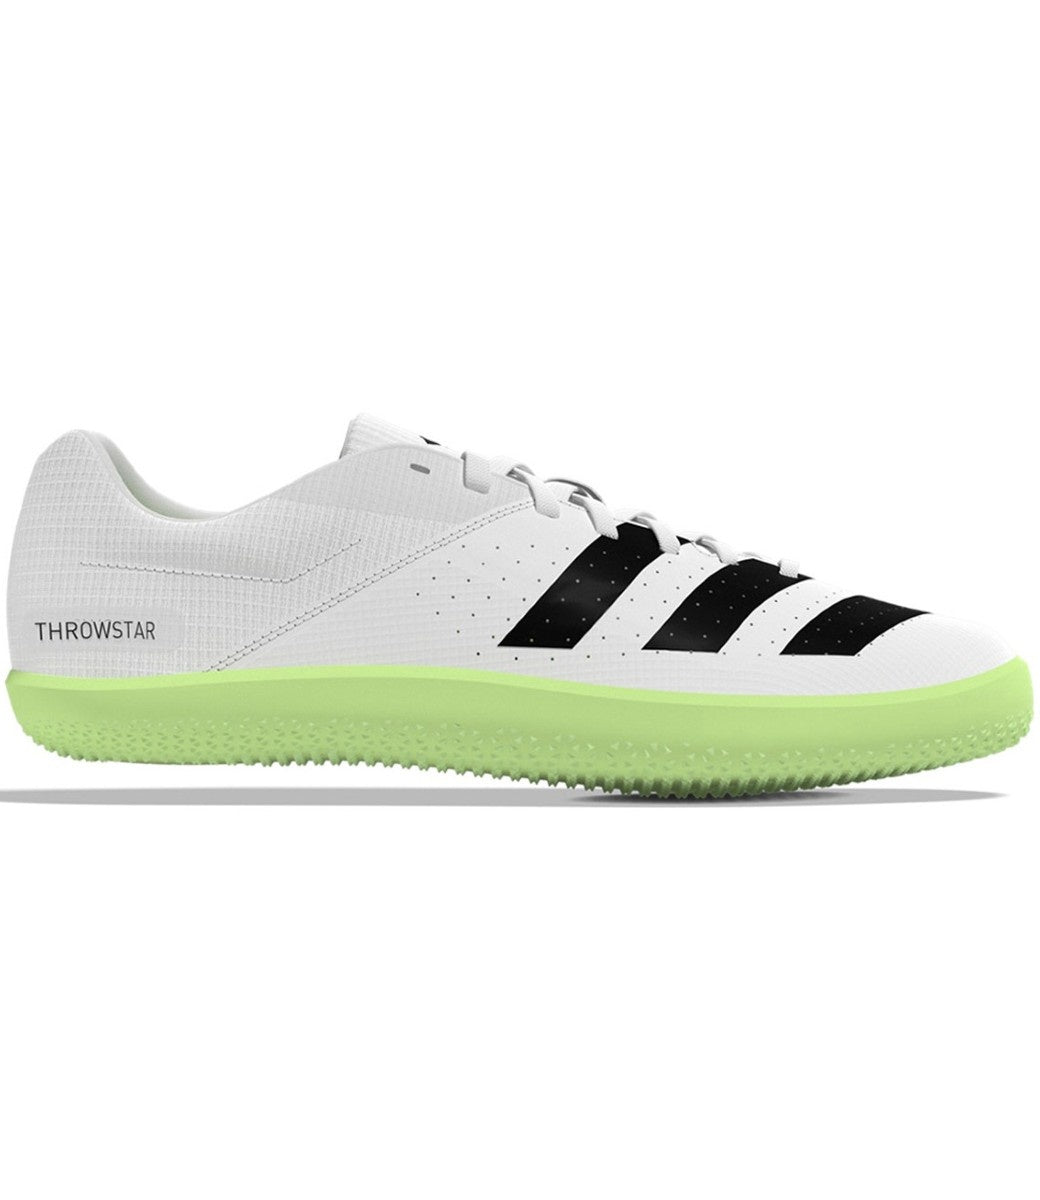 Unisex Adidas Throwstar Throwing Shoe - ID7229